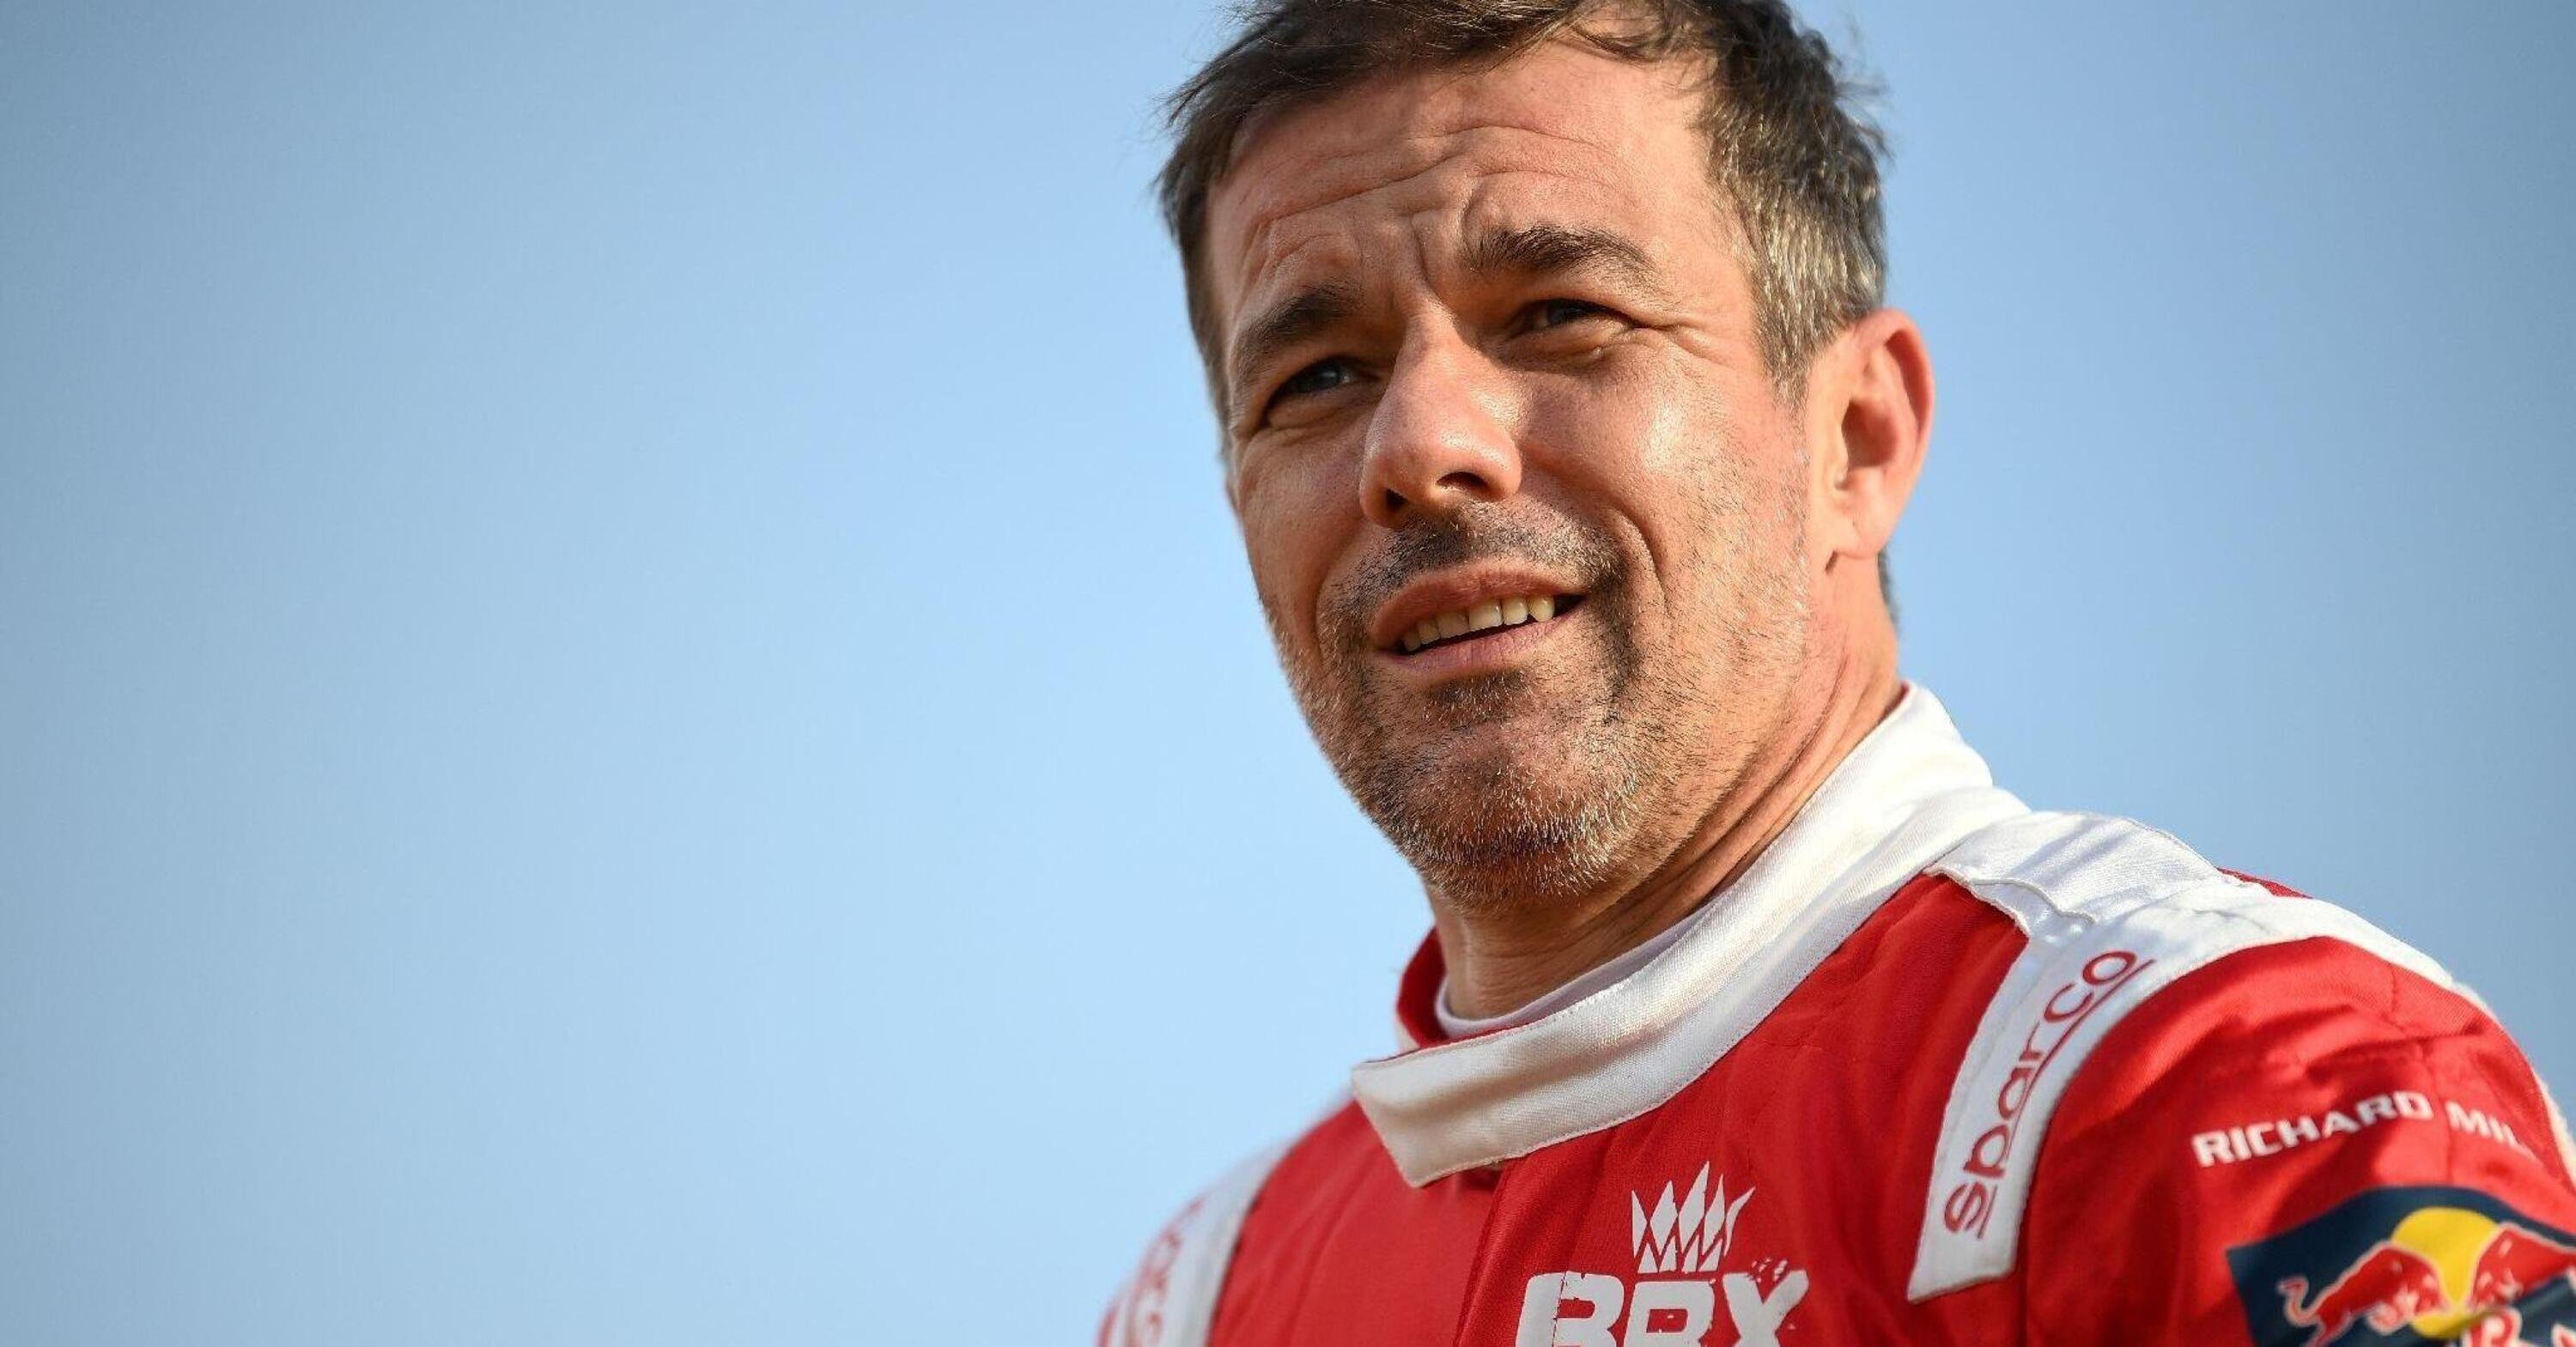 Dakar 2023. Bahrain Raid Xtreme: La Volta Buona di Loeb?